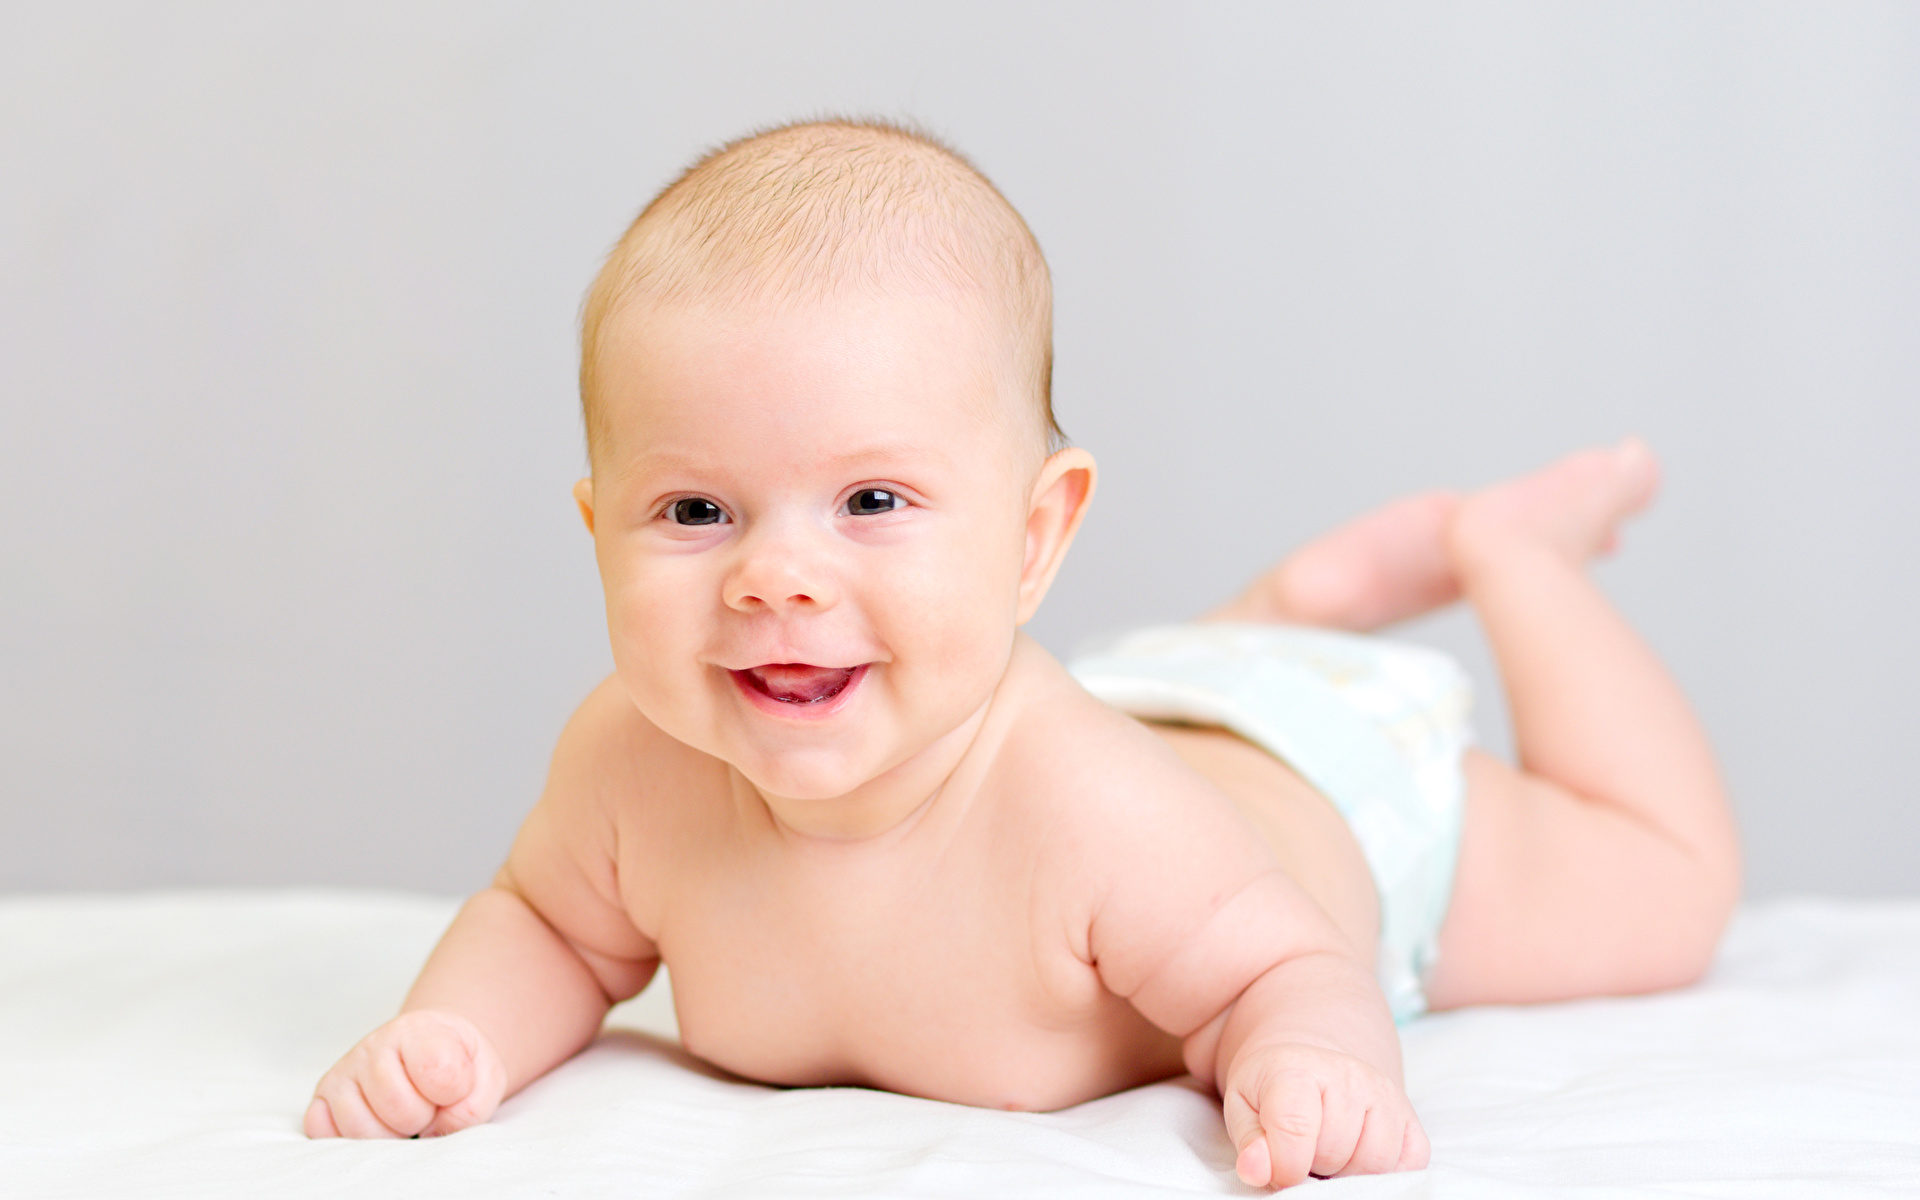 Фото младенца улыбается Дети 1920x1200 Младенцы младенец грудной ребёнок Улыбка ребёнок